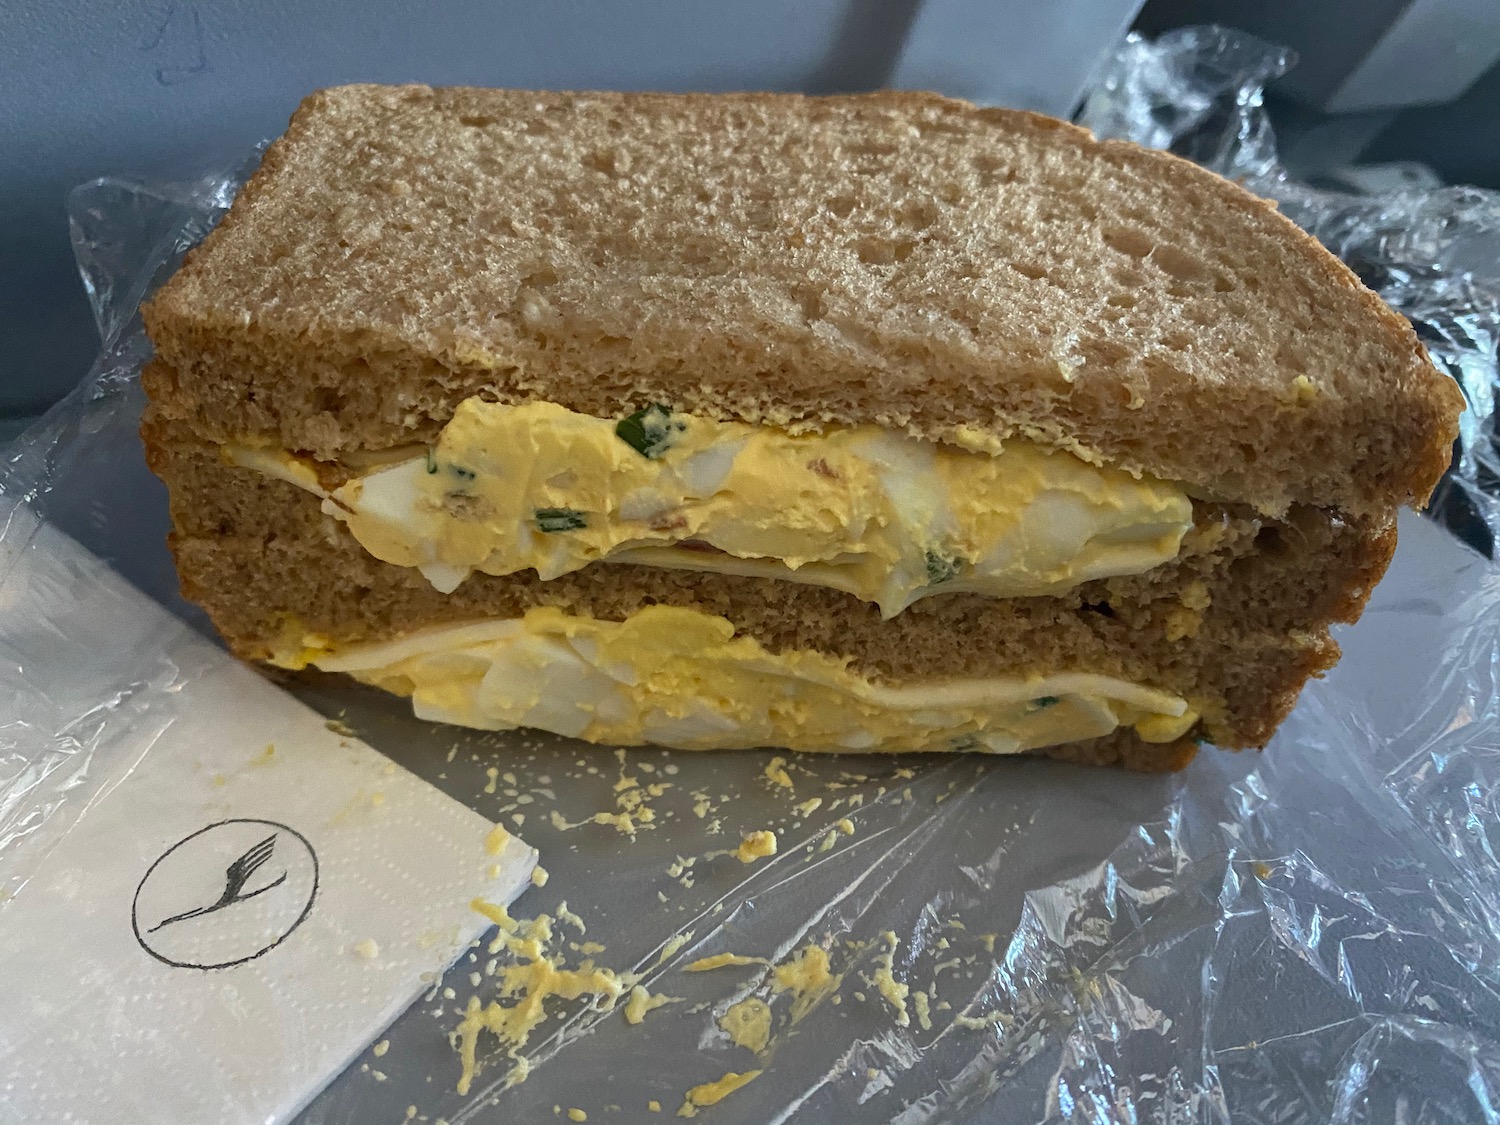 a sandwich on a plastic wrapper